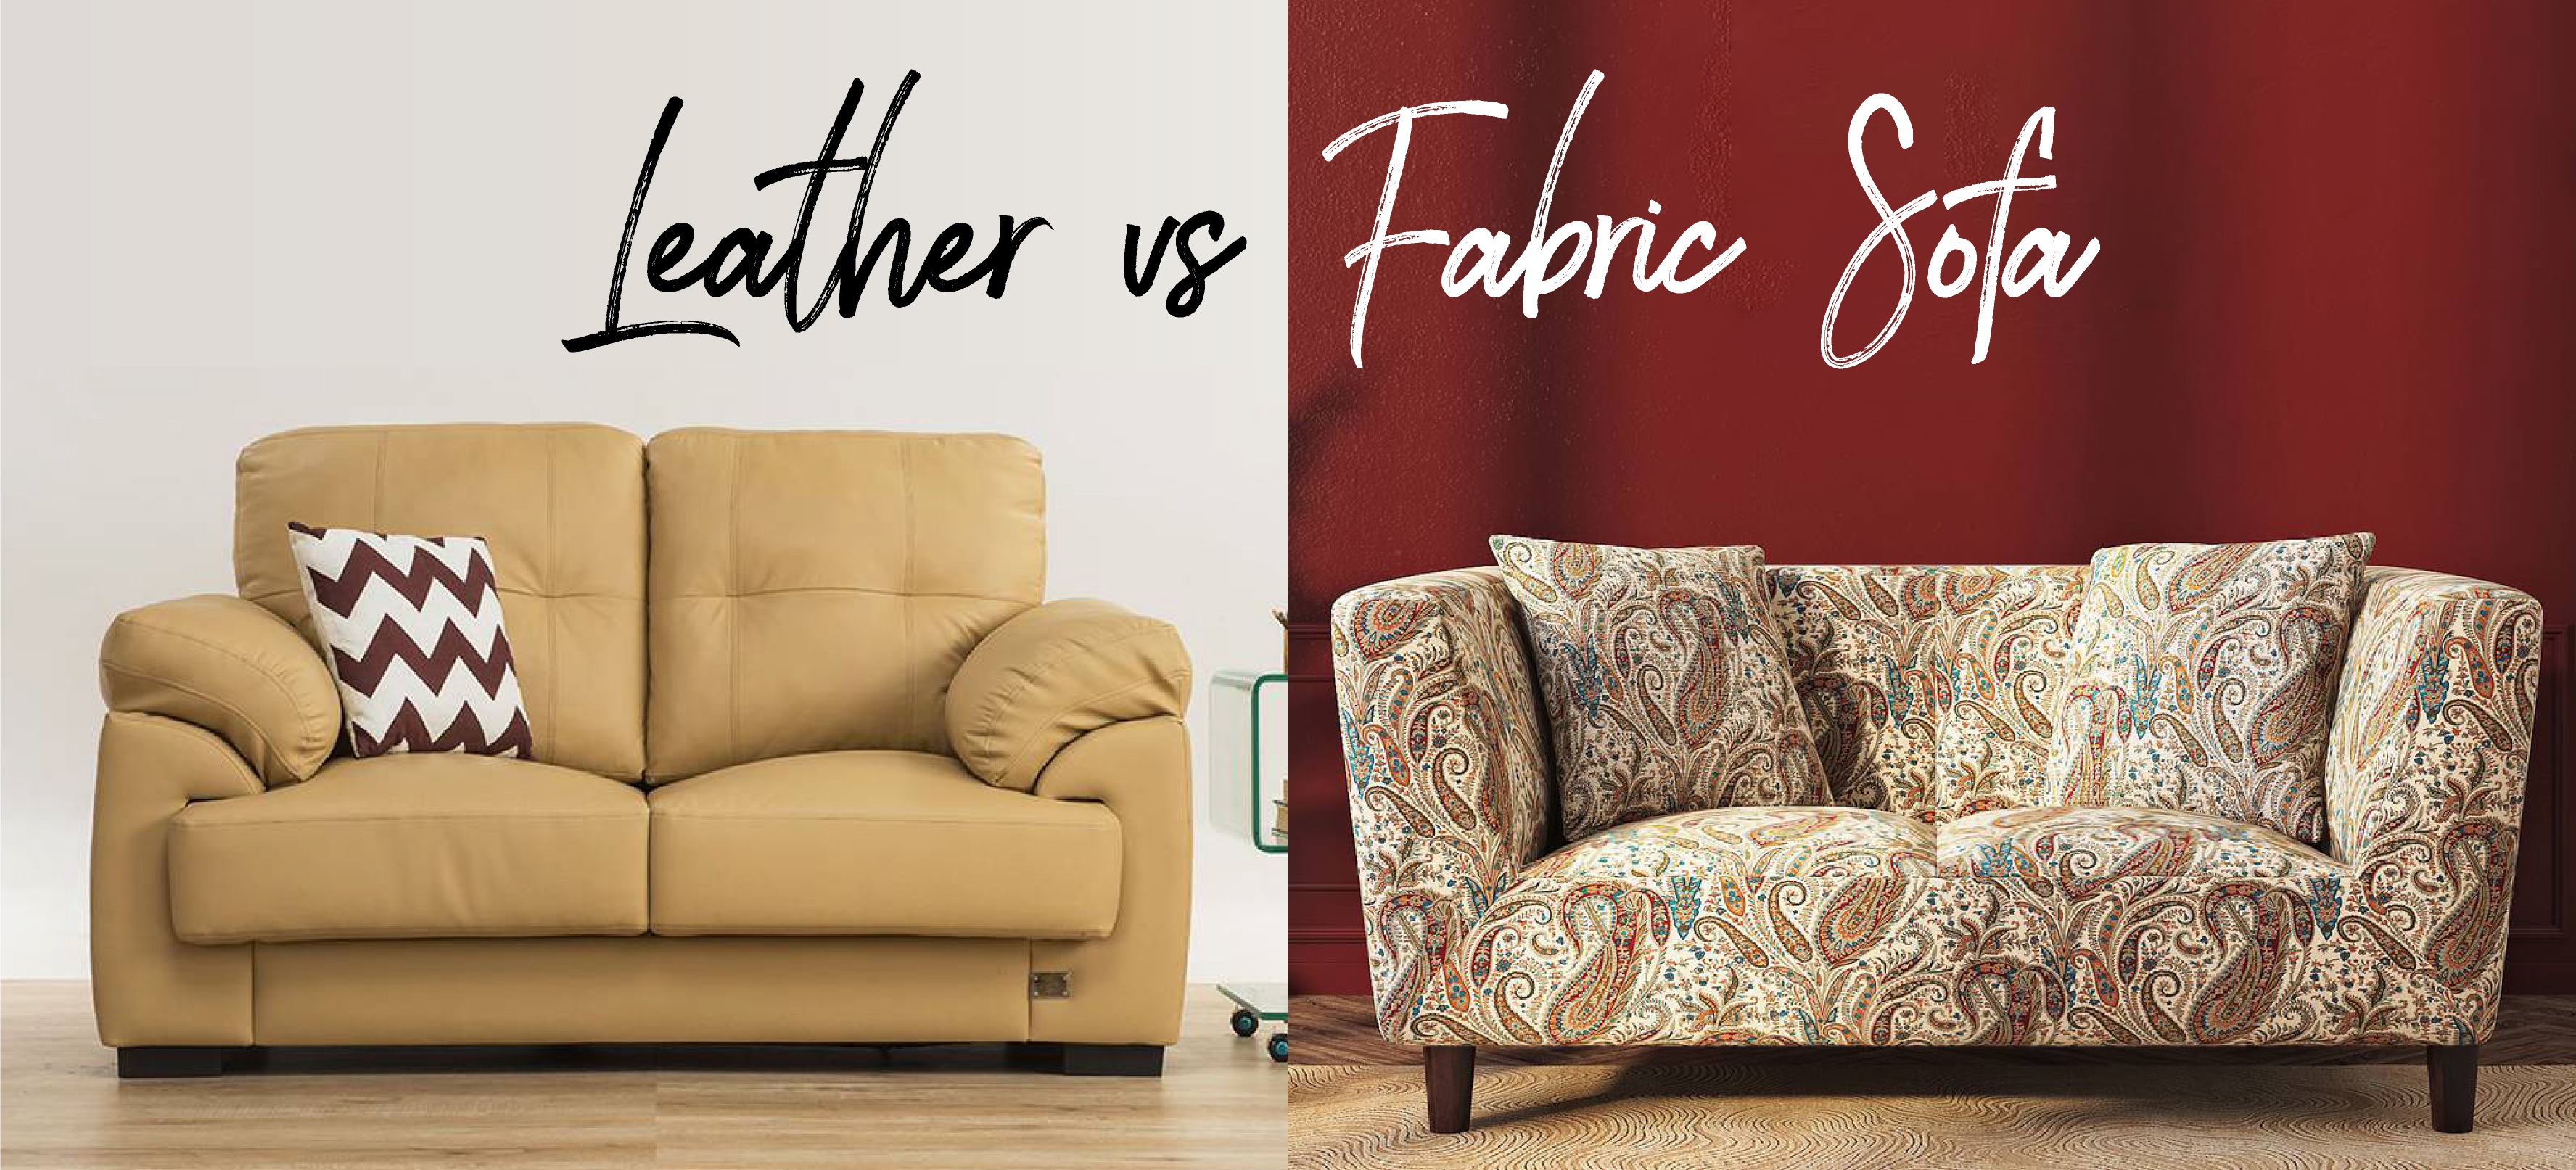 Pros And Cons Of Leather Sofa Vs Fabric Sofa